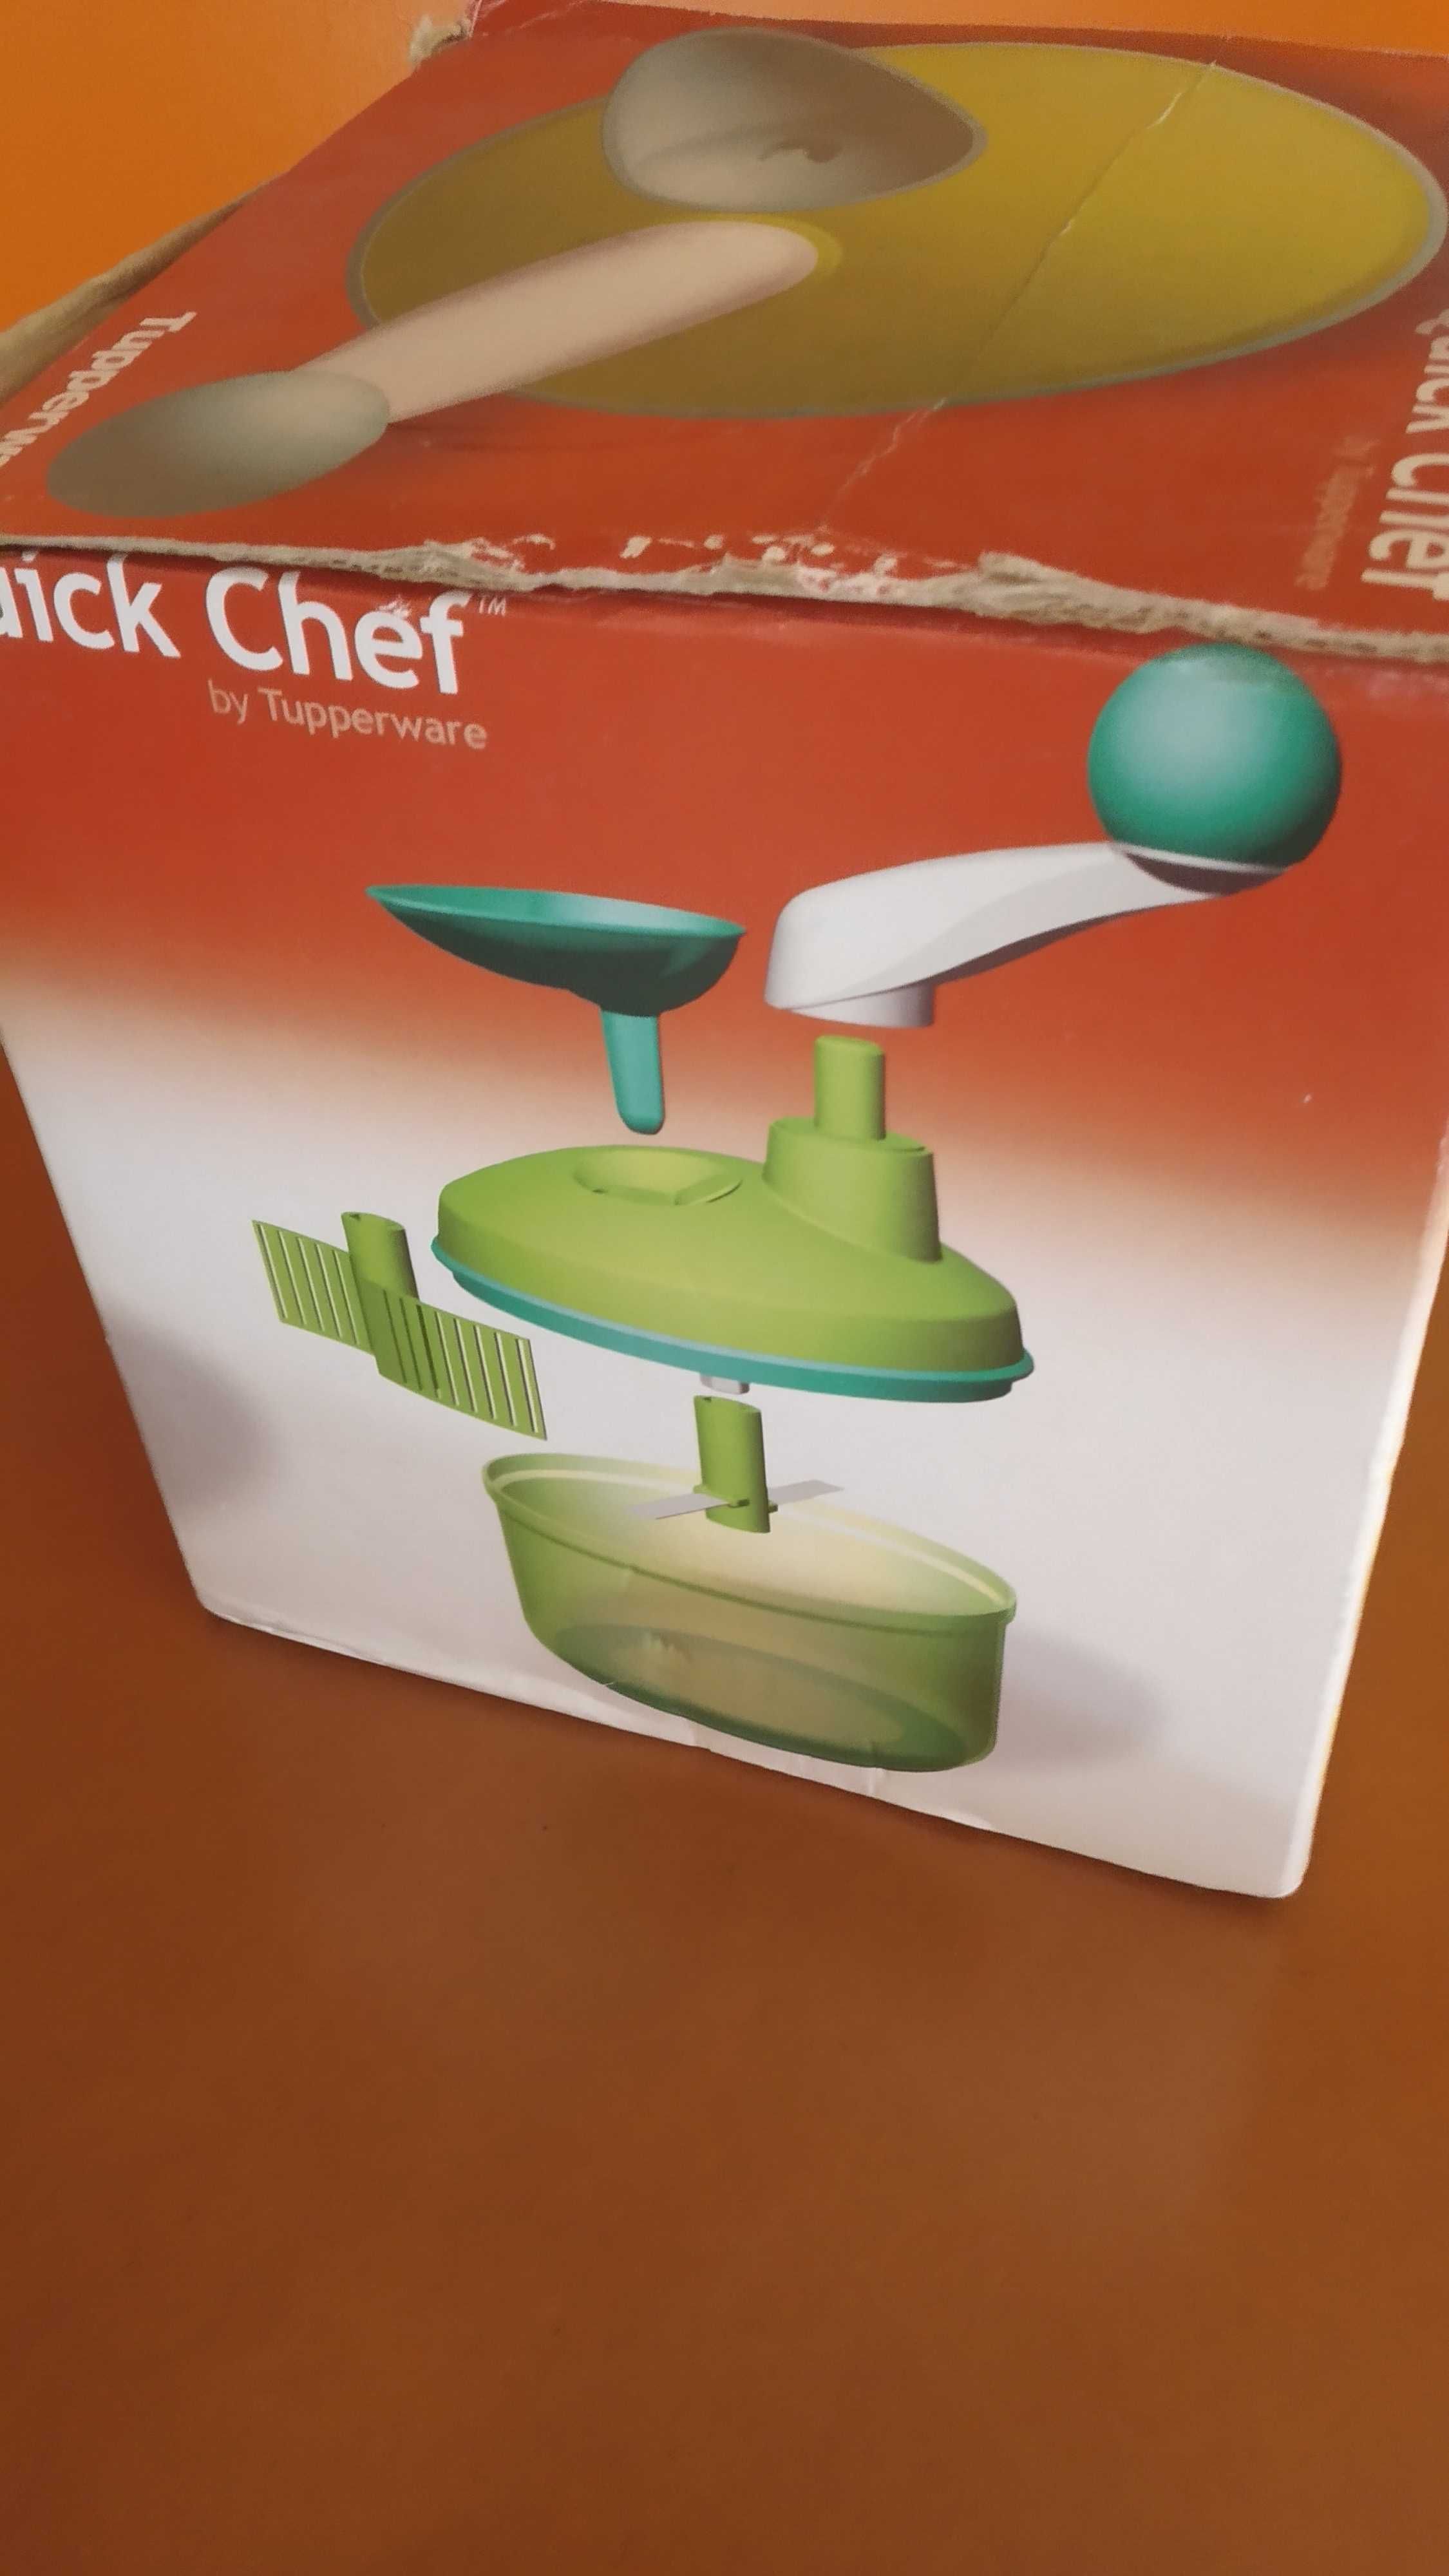 Tupperware Quick Chefe